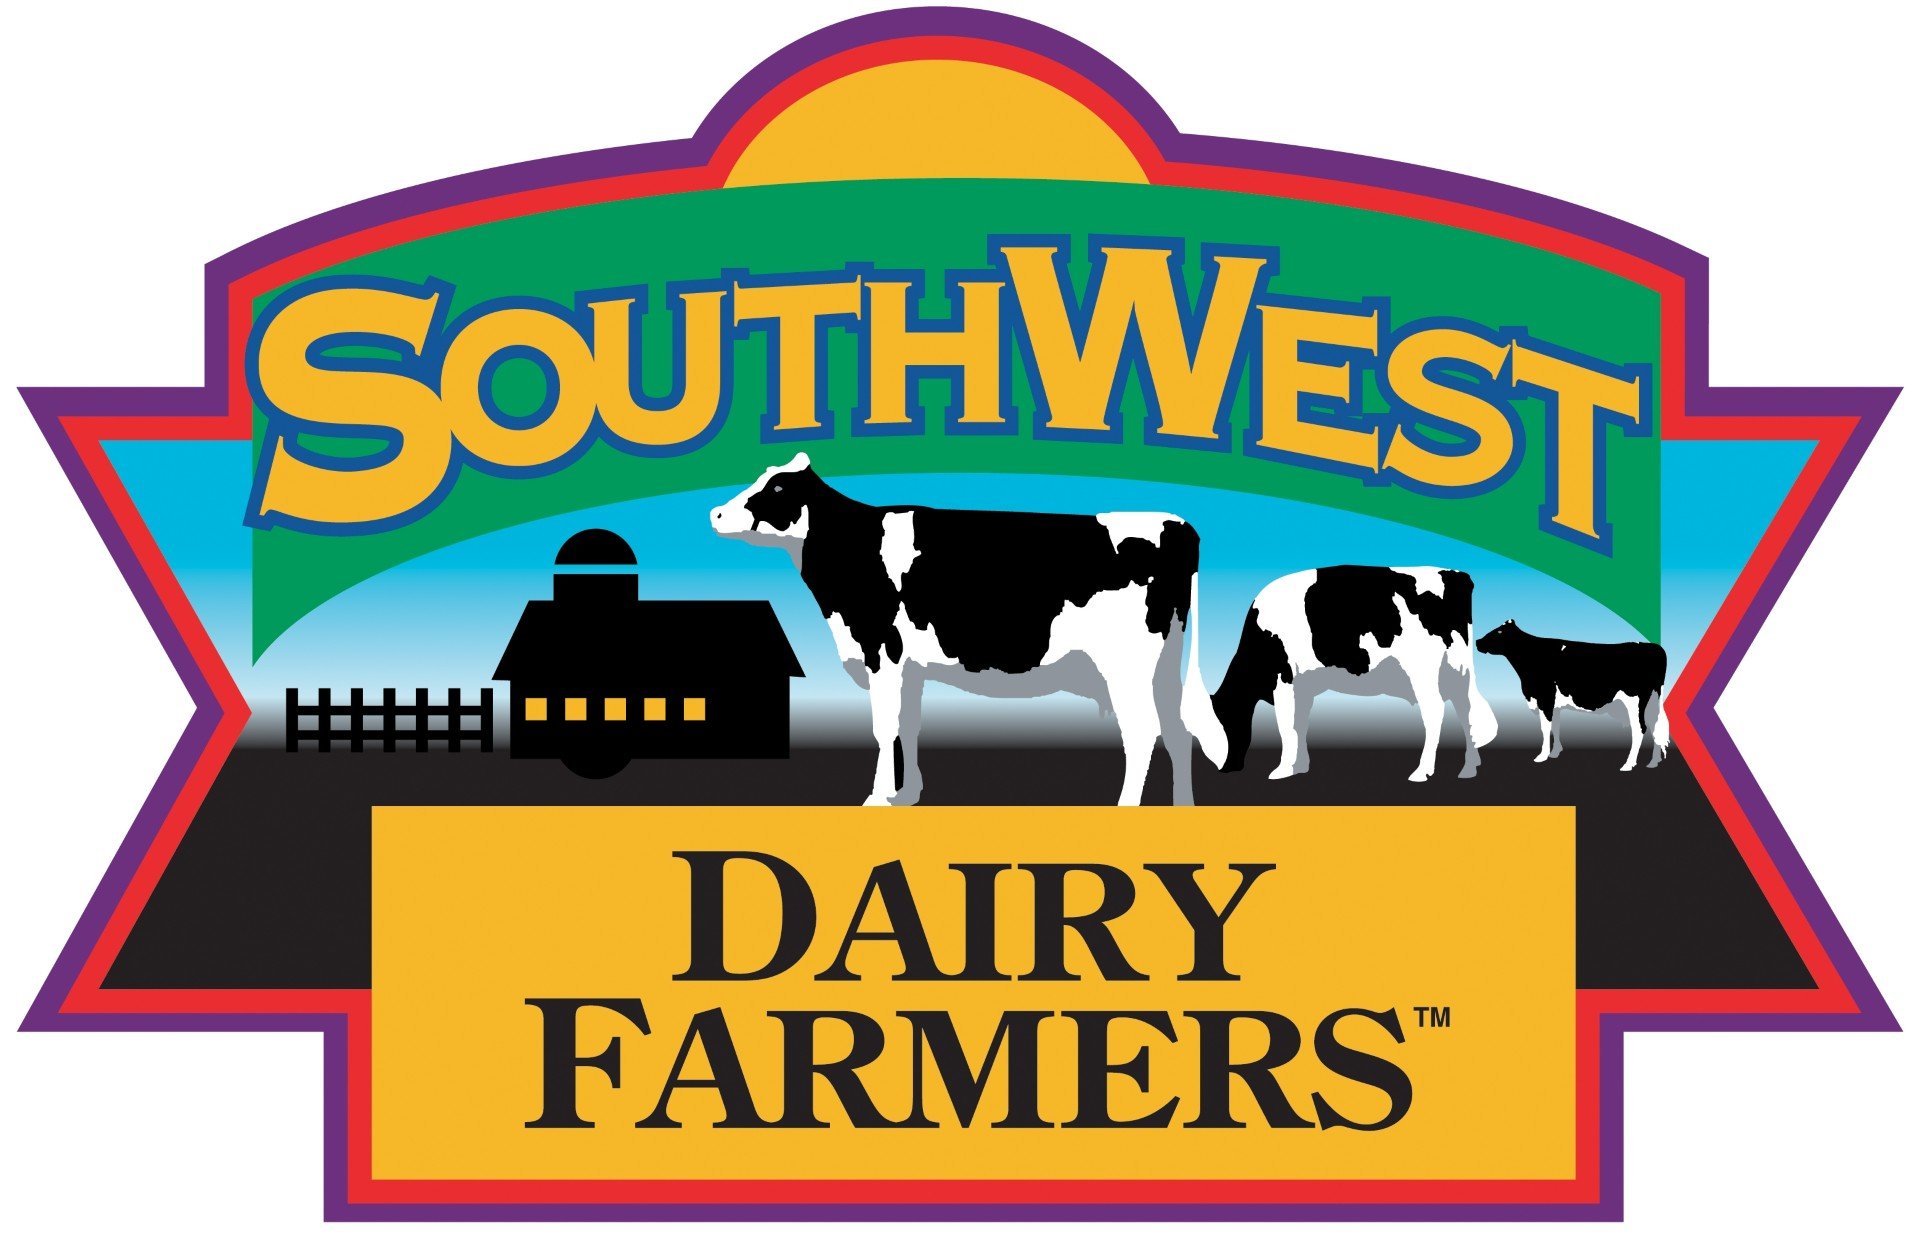 Southwest Dairy Farmers logo.jpg